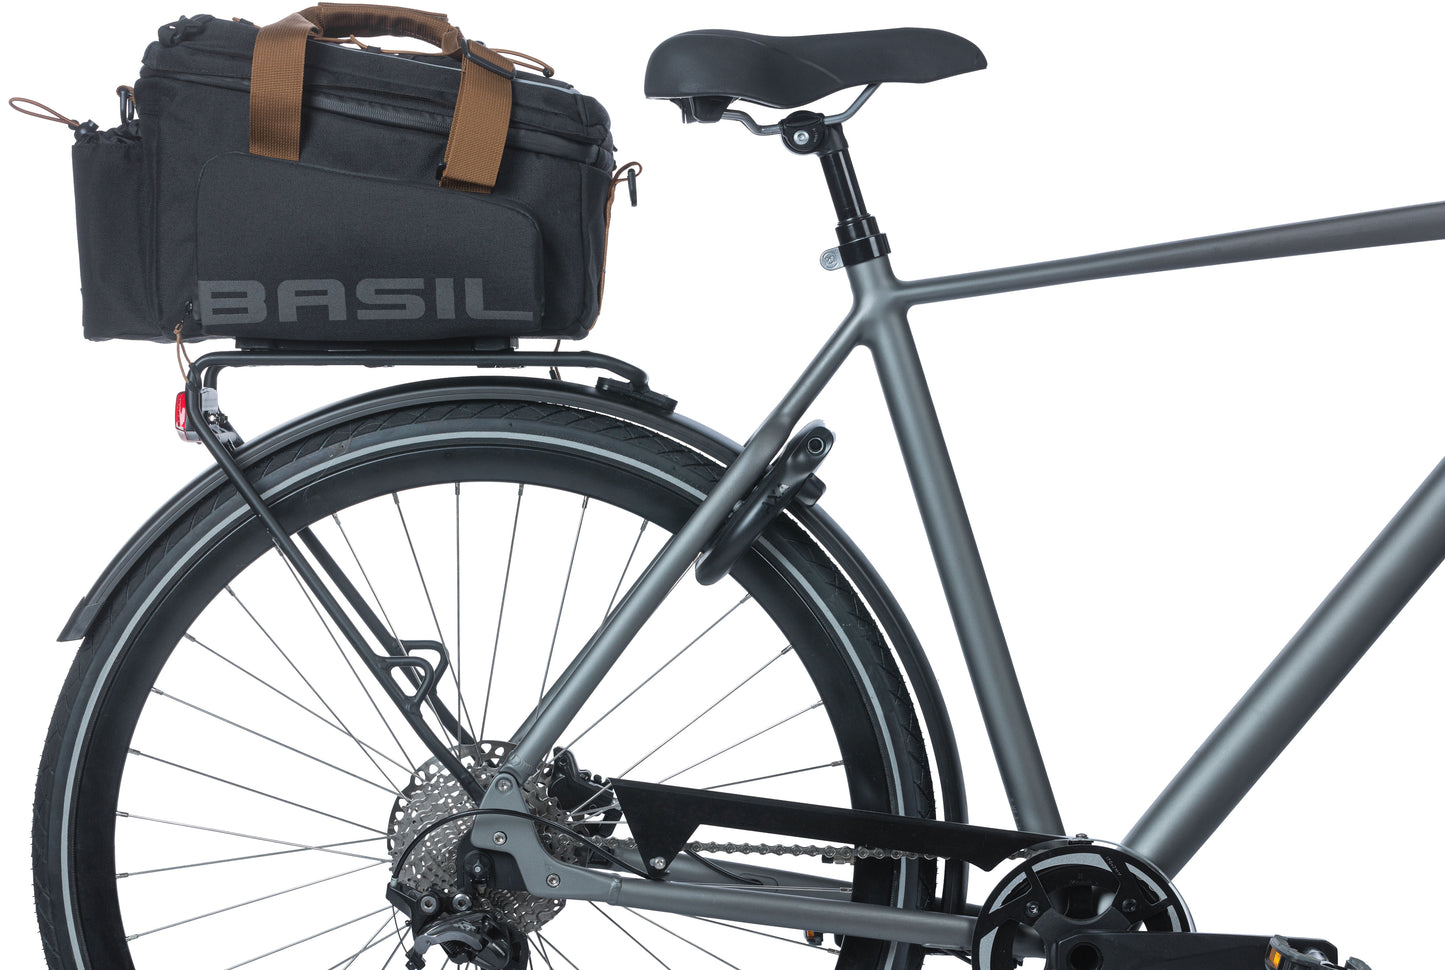 Basil Miles XL Bagage Behaviour Borse Uomini impermeabili Bike nero